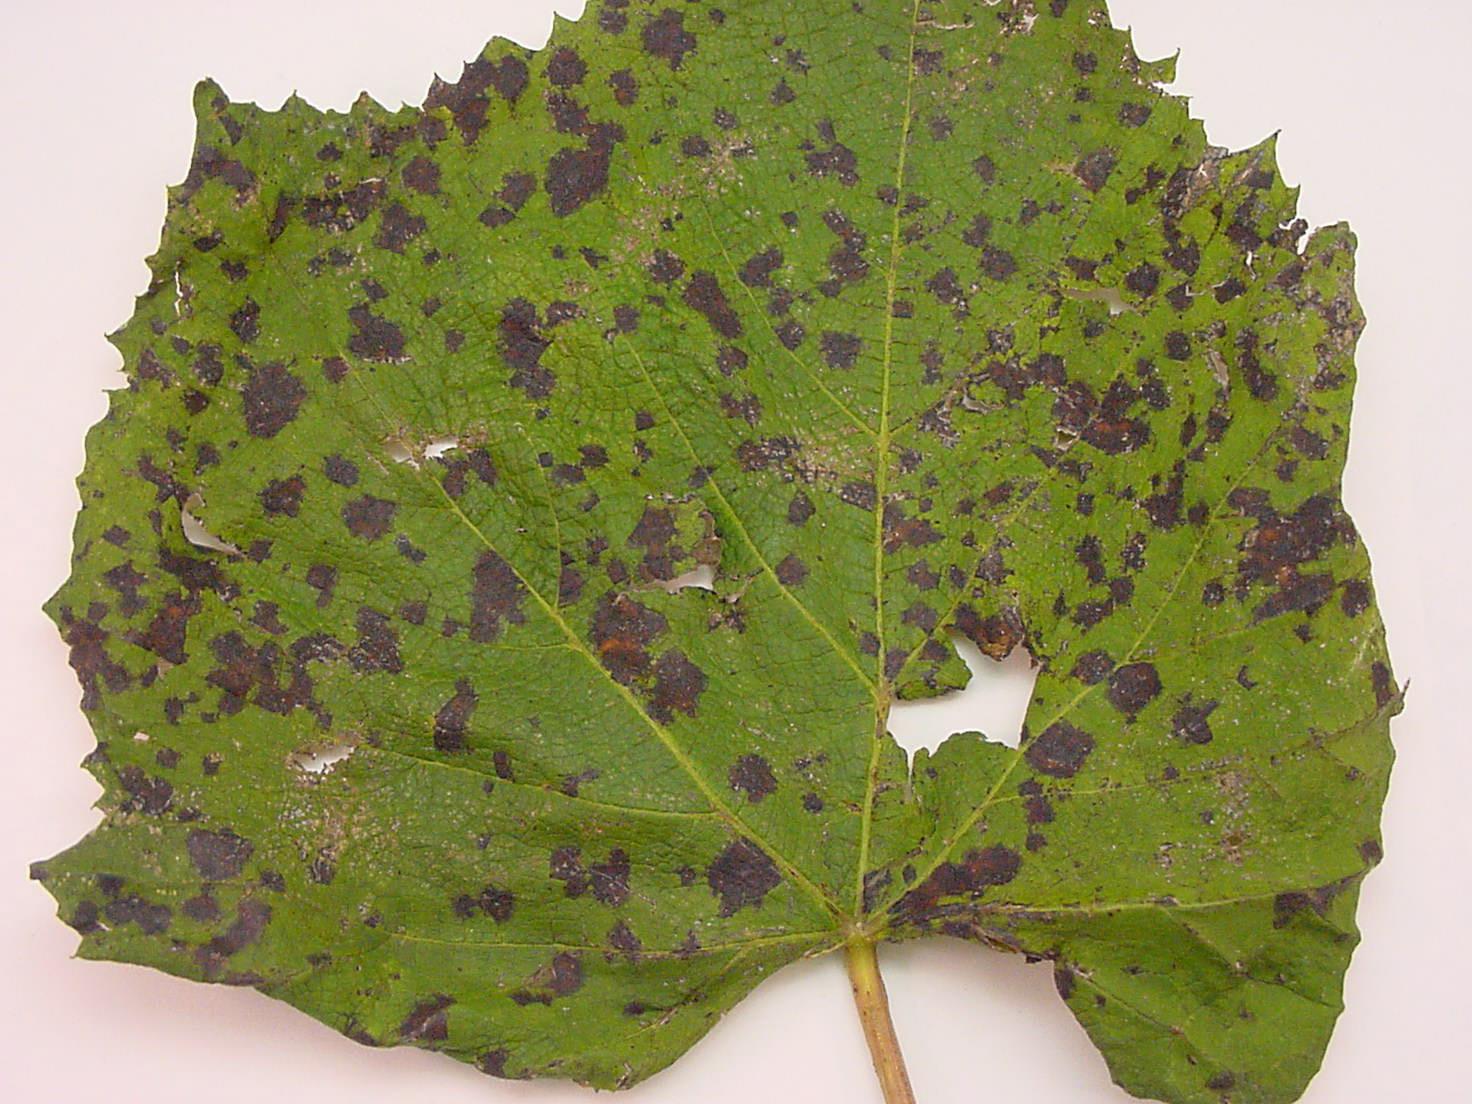 Leaf spots